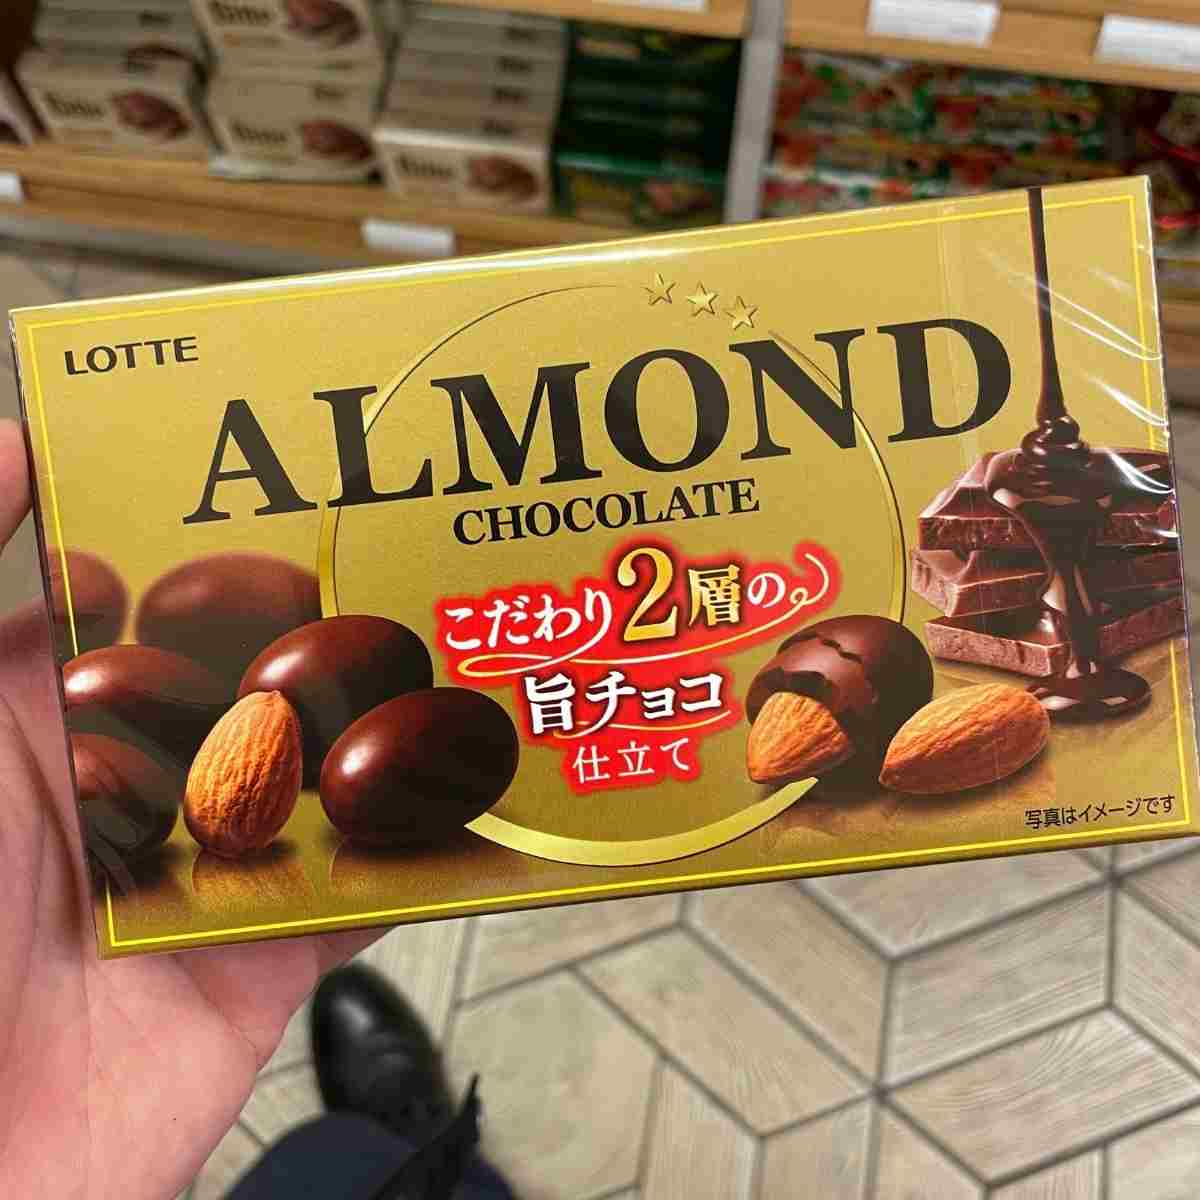 Lotte almond milk chocolate